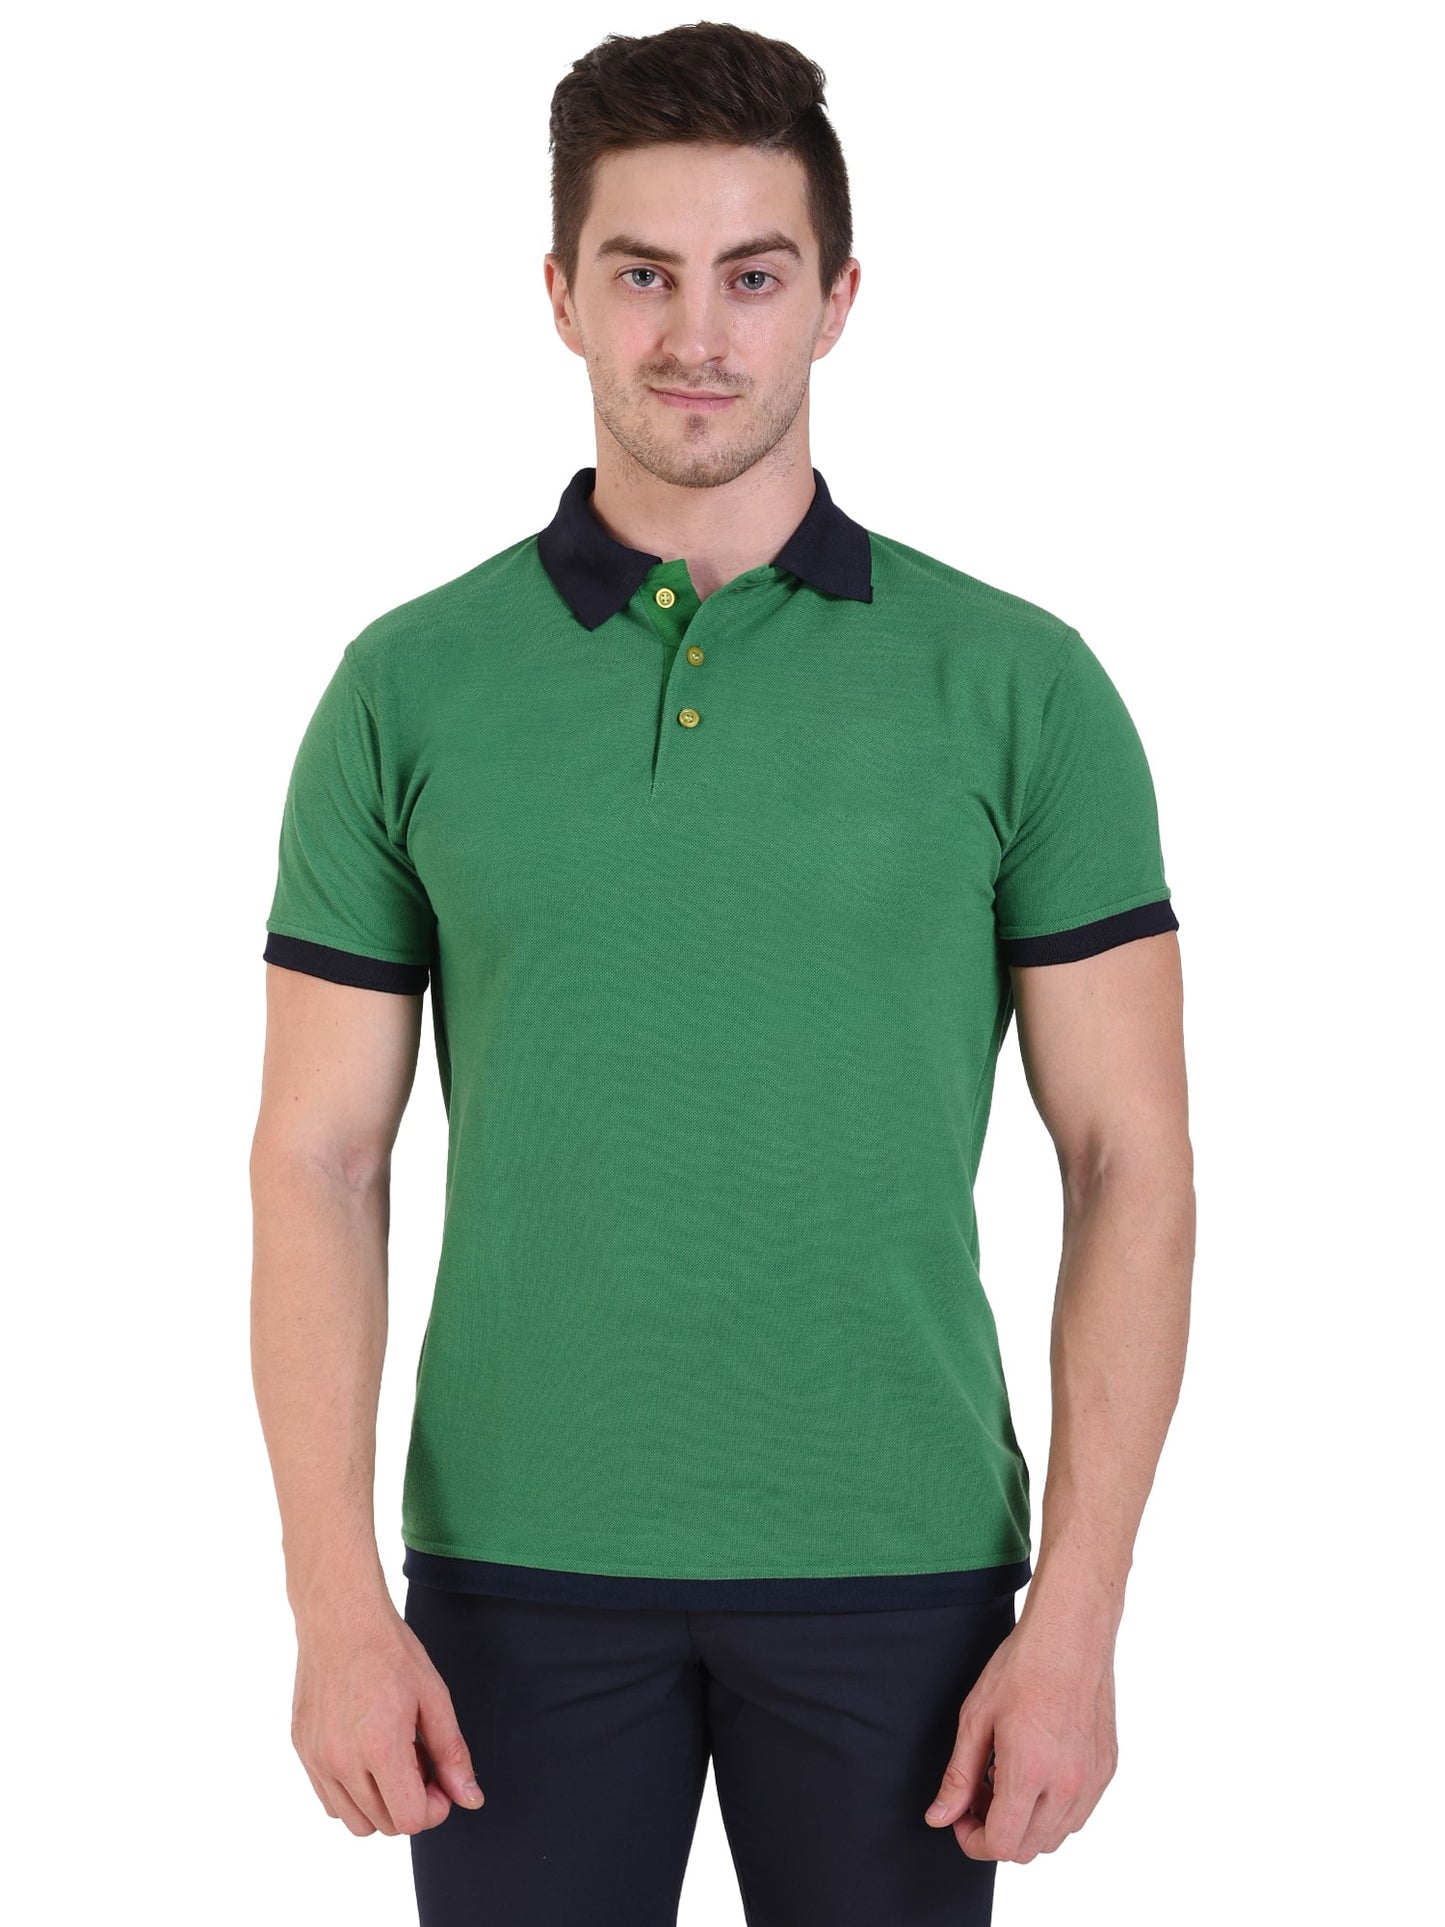 Green Polo AutoUniform Corporate T-Shirt Uniform